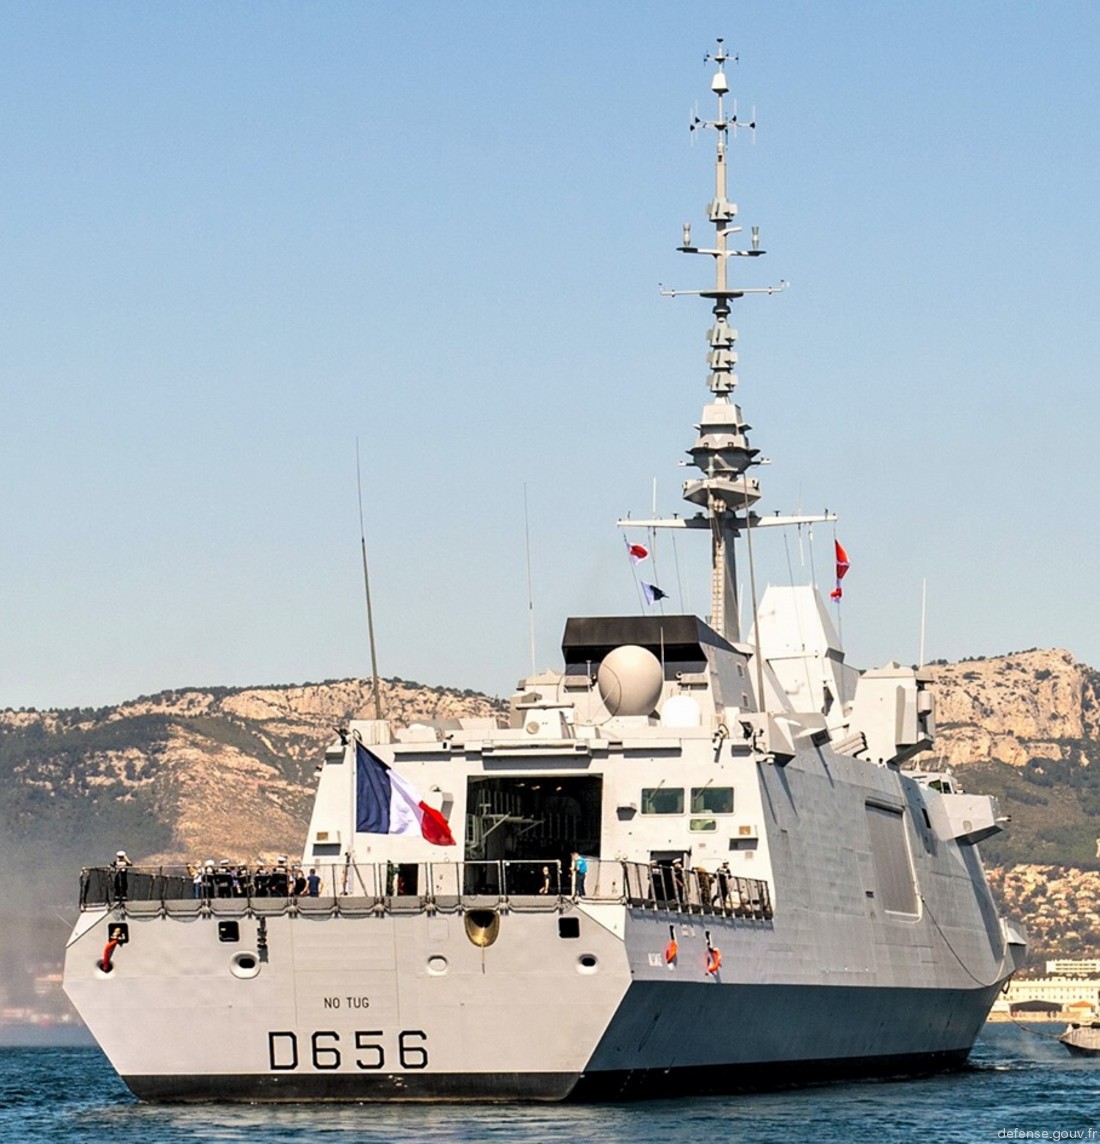 d-656 fs alsace fremm aquitaine class frigate fregate multi purpose french navy marine nationale 12